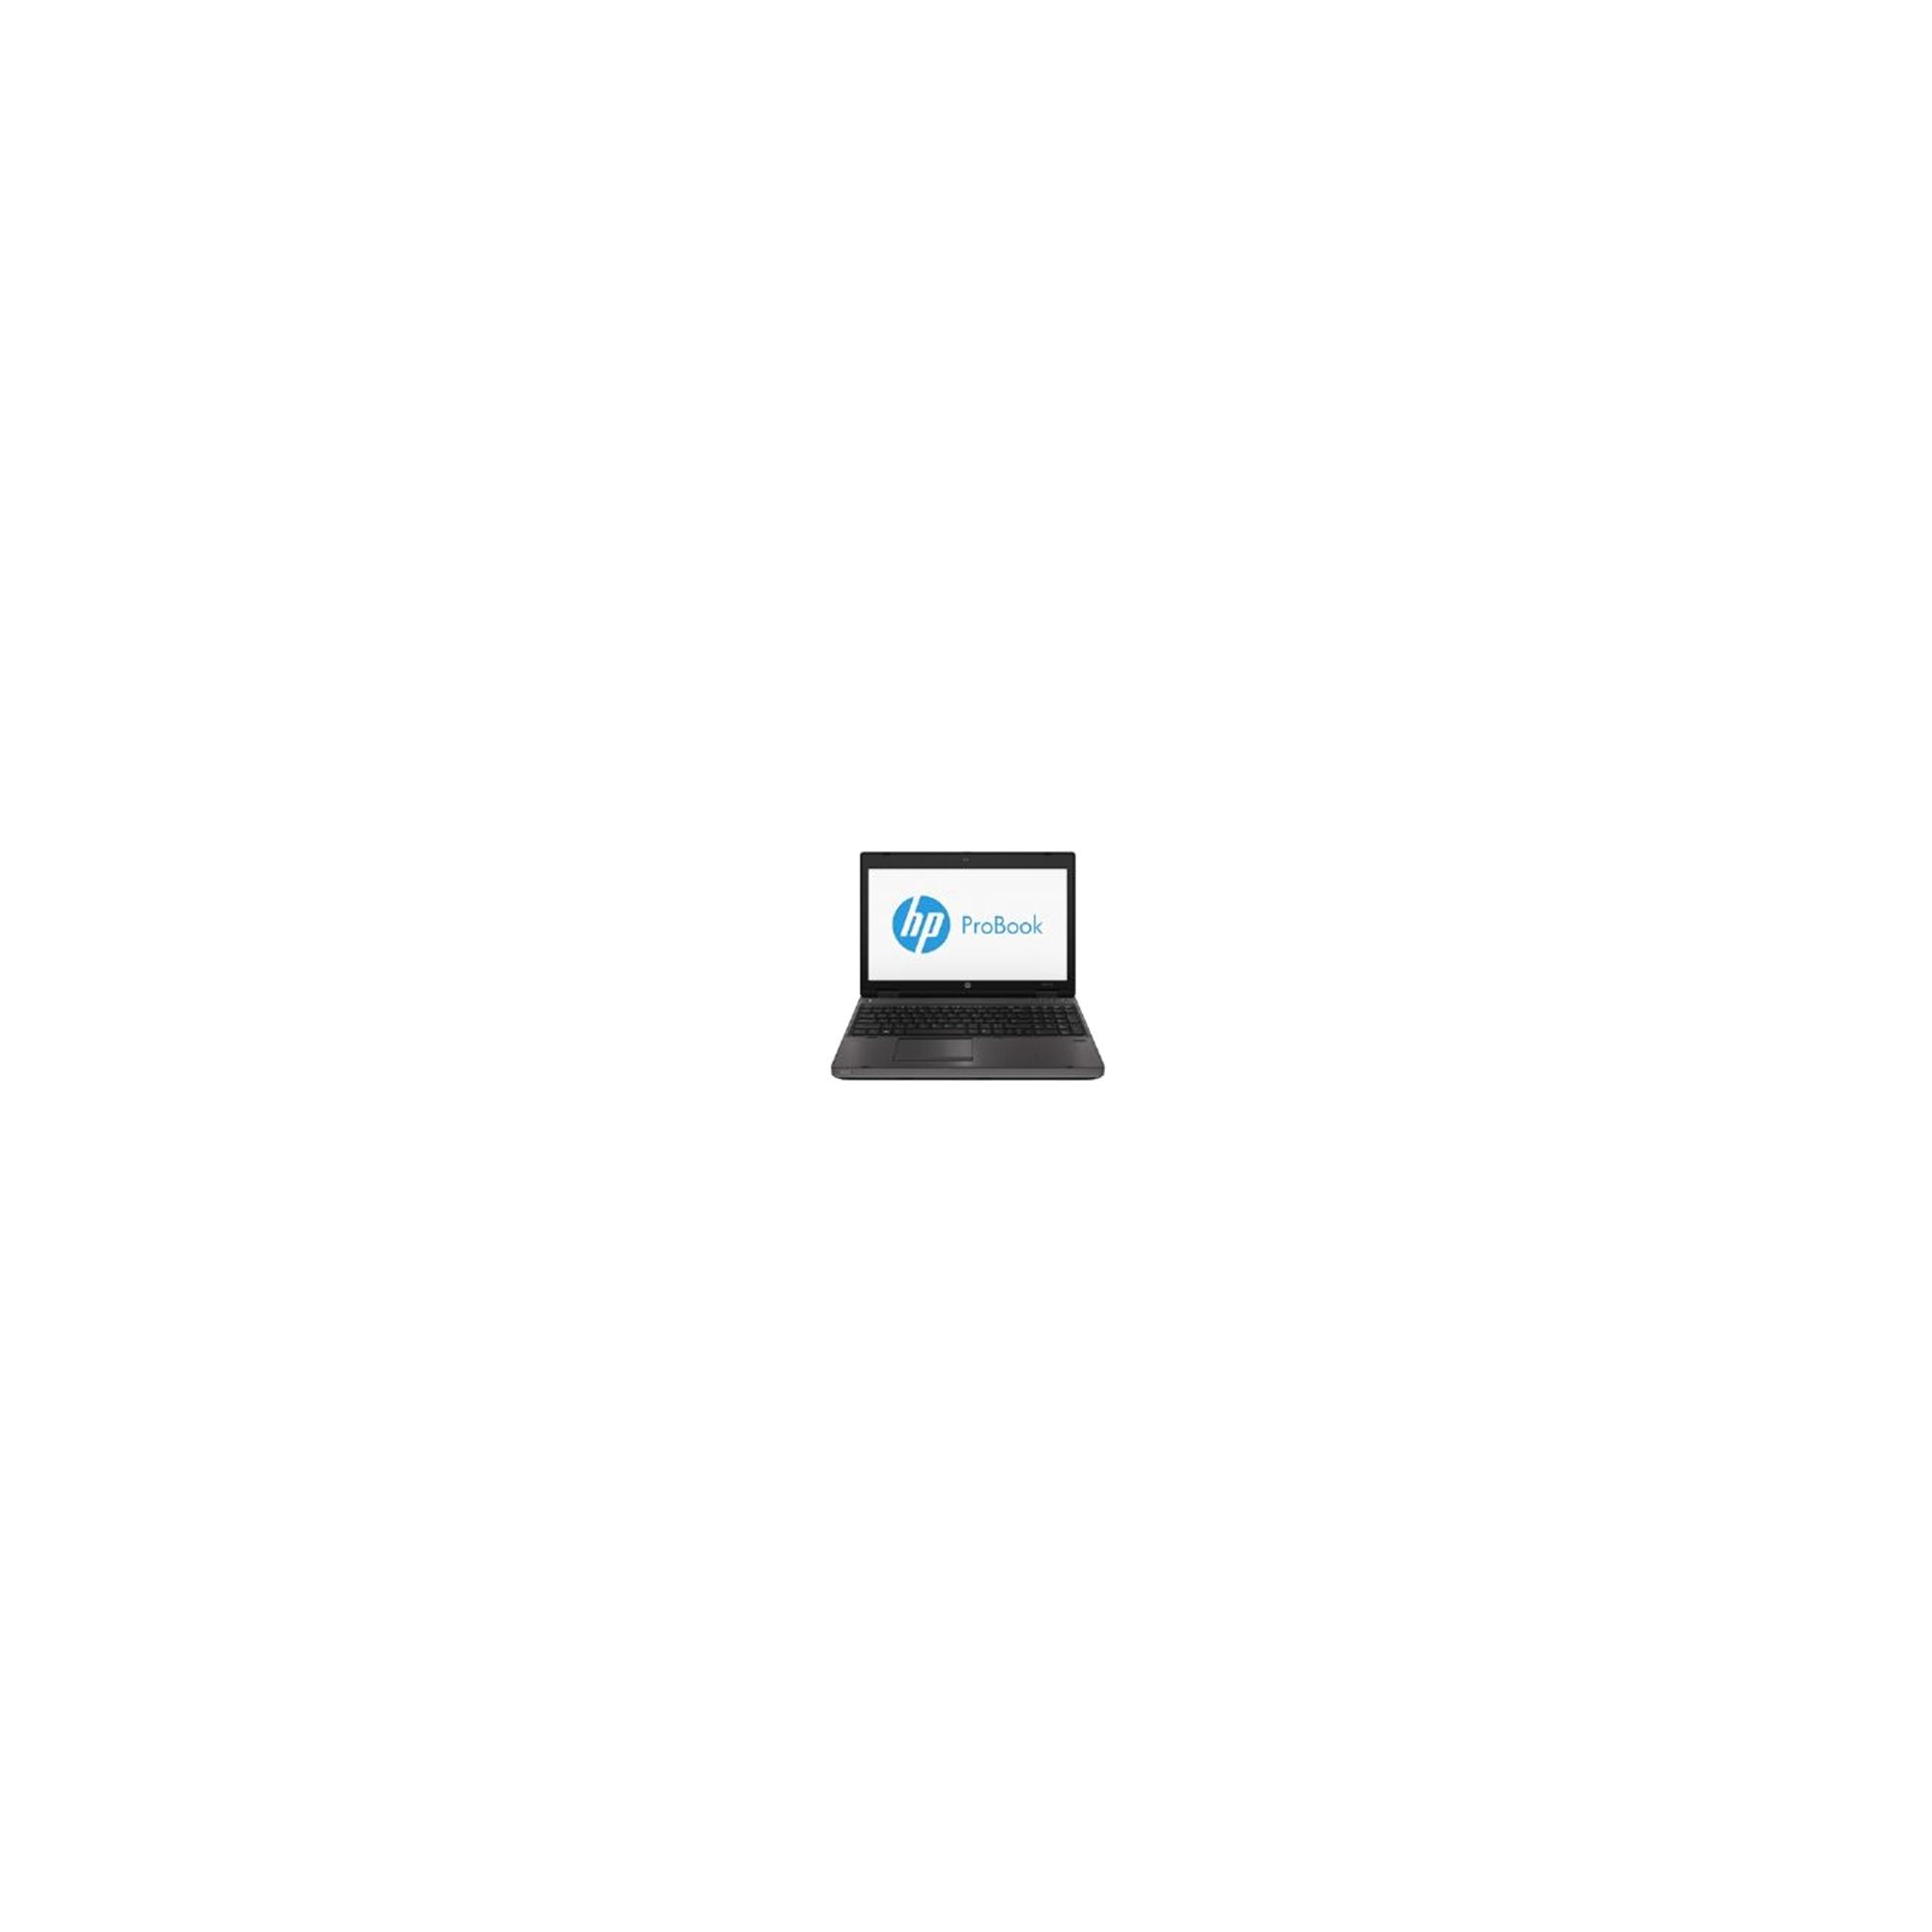 HP ProBook 6570b (15.6 inch) Notebook Core i5 (3320M) 2.6GHz 4GB 500GB DVD±RW SM DL WLAN BT WWAN Webcam Windows 7 Pro 64-bit (Intel HD Graphics) at Tesco Direct